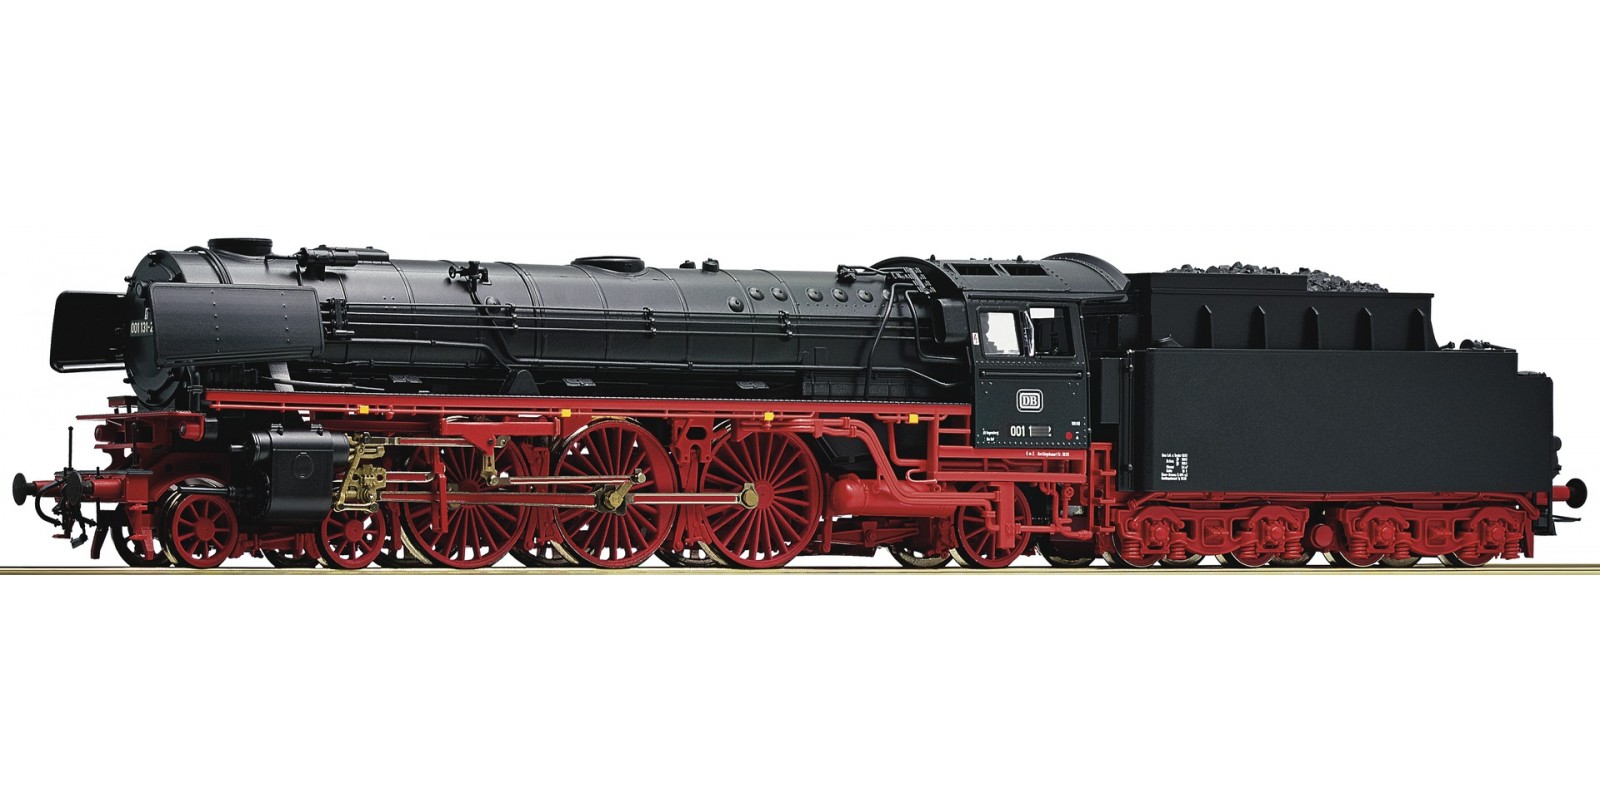 RO72198 - Steam locomotive class 001, DB